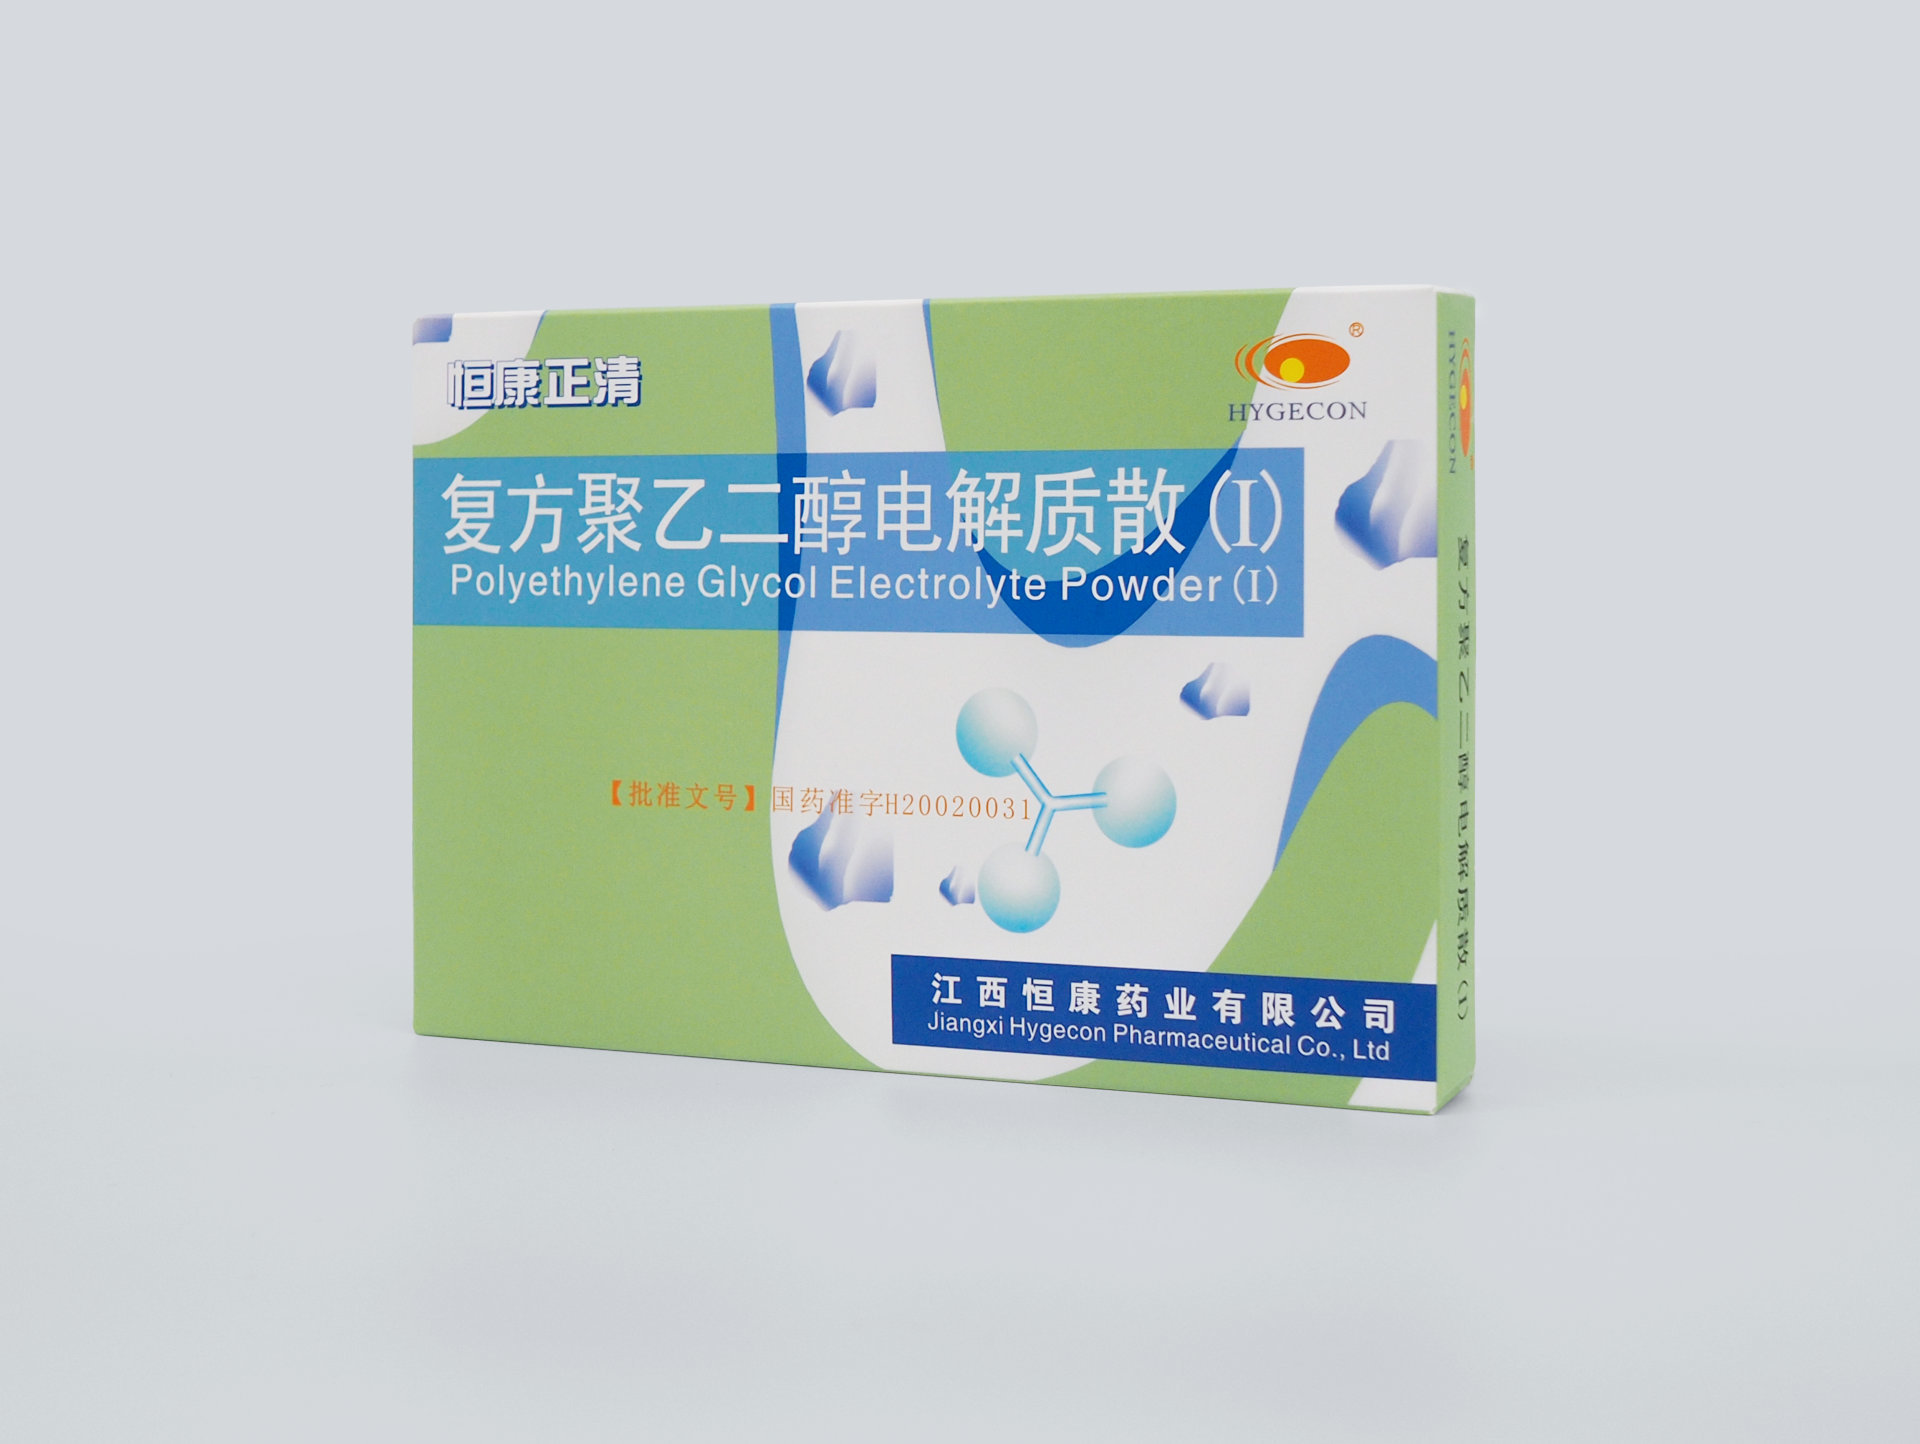 Compound polyethylene glycol electrolyte powder